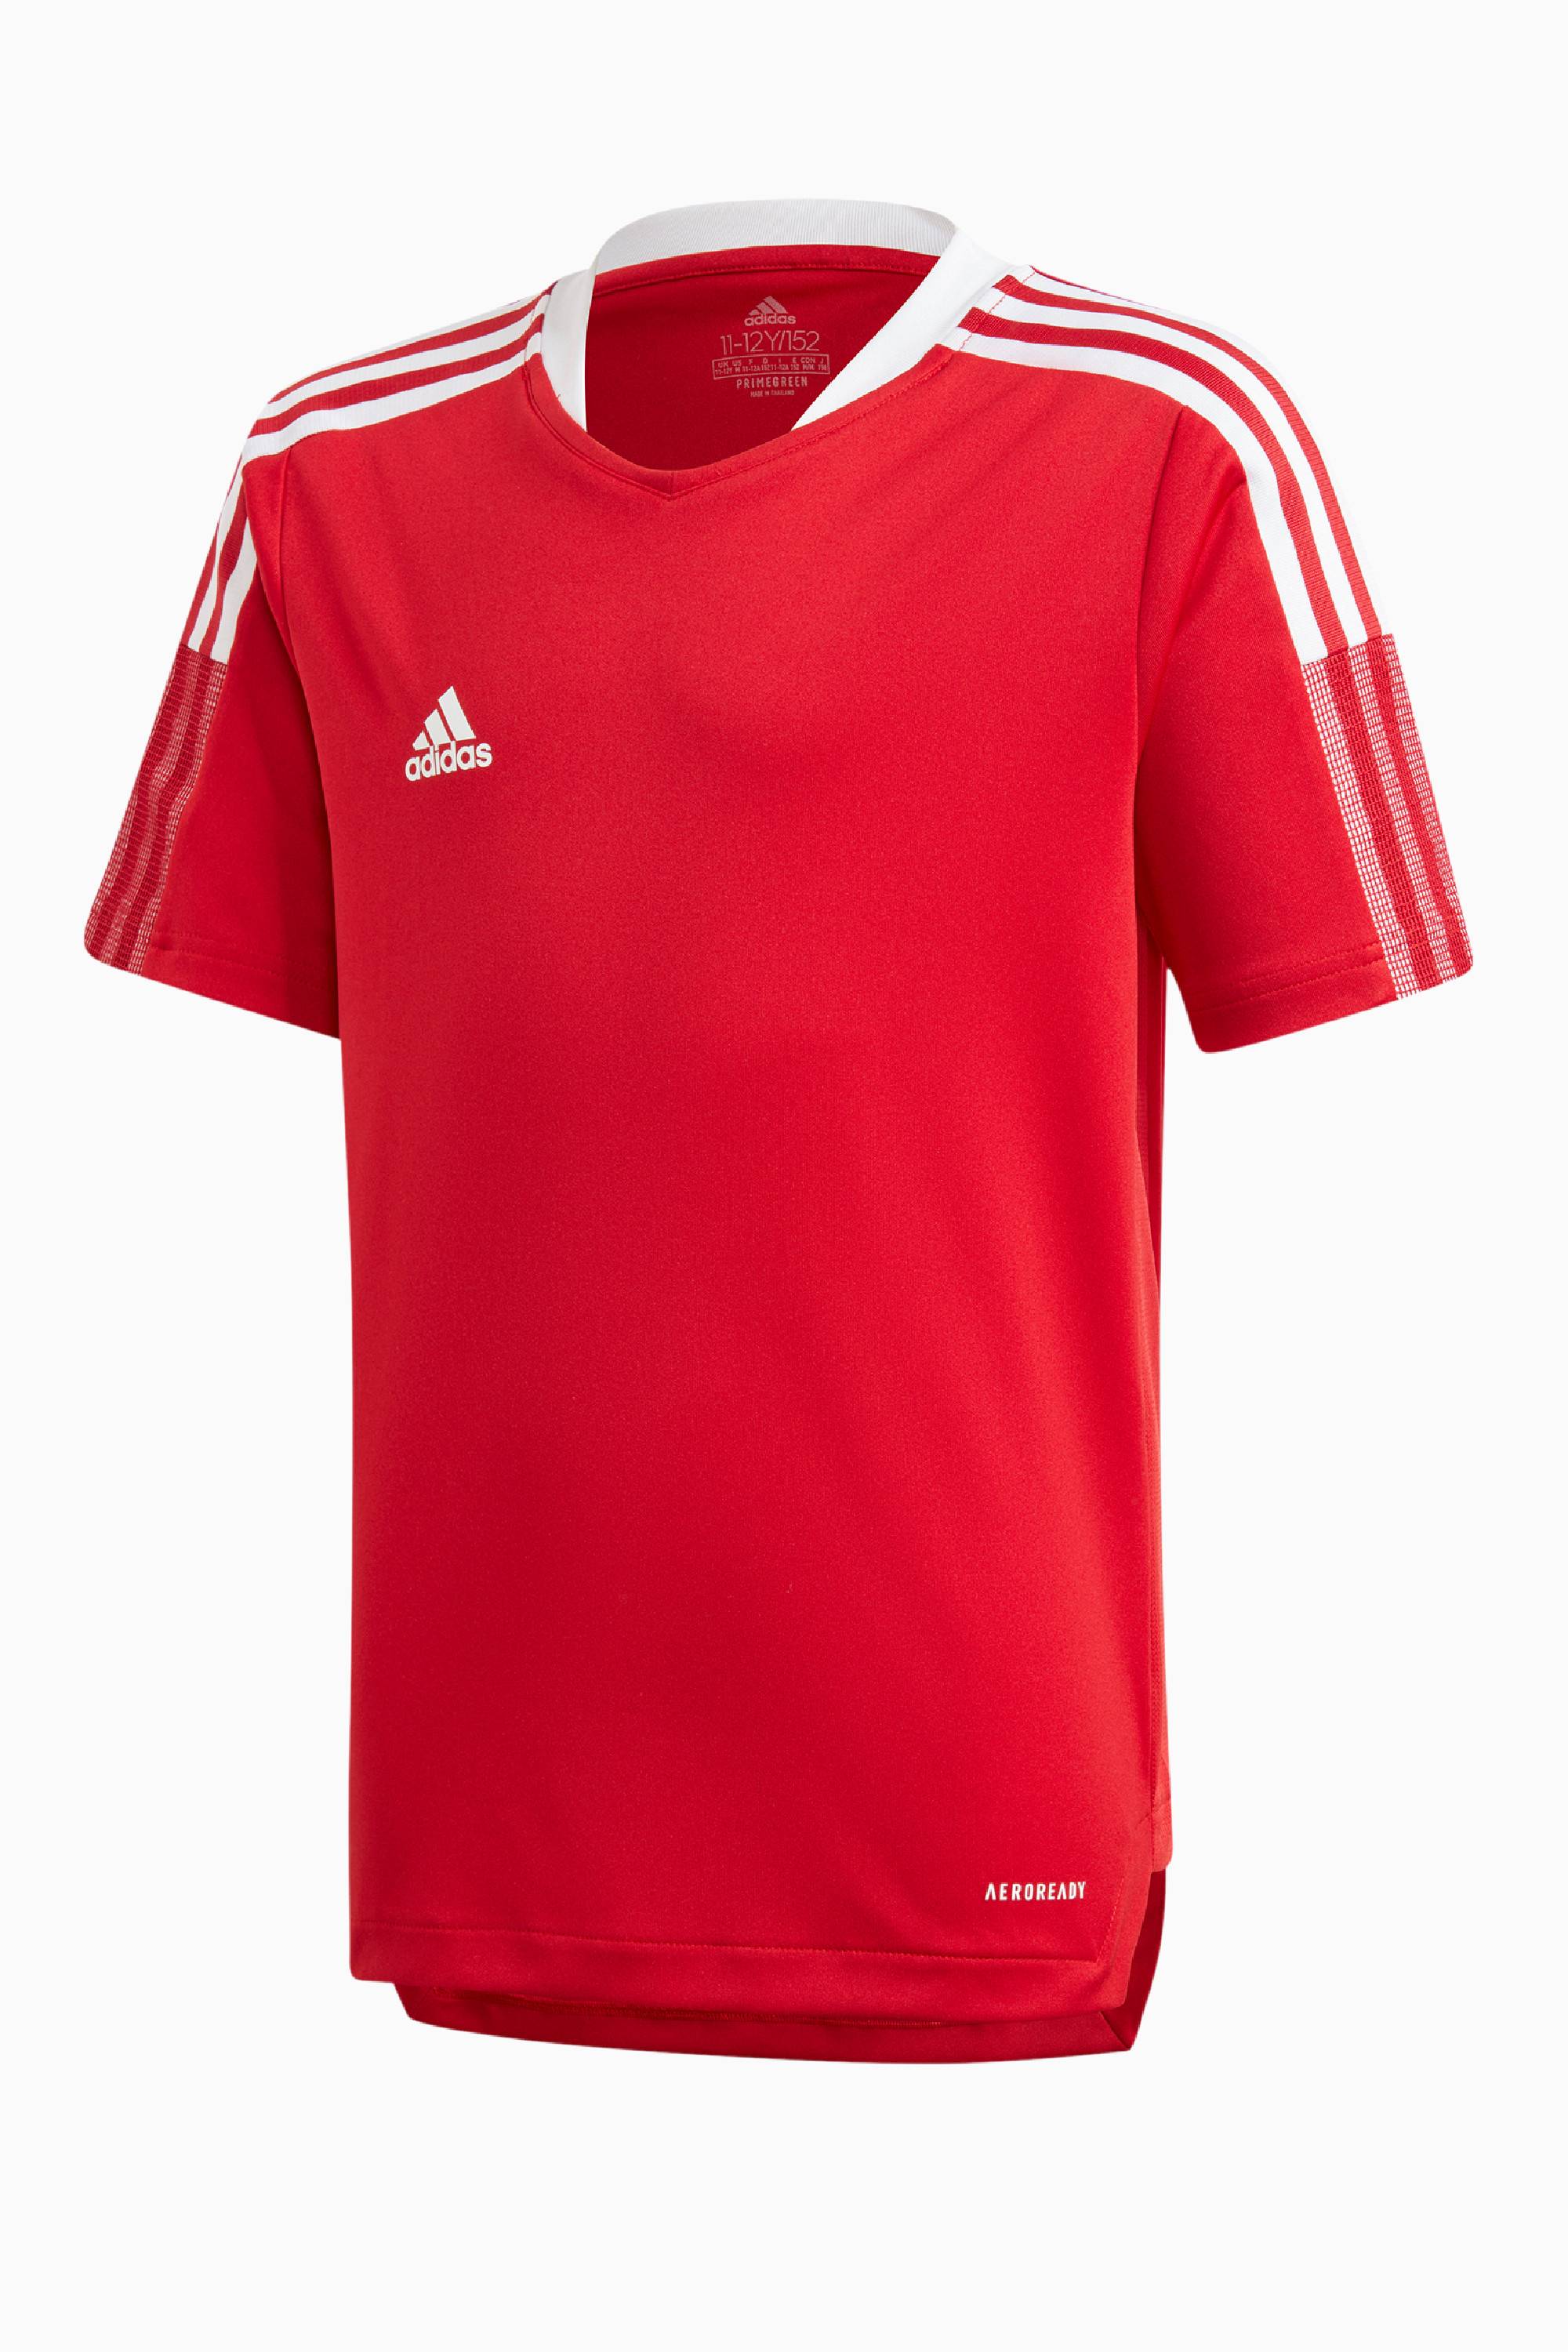 metallisk Predictor Ashley Furman T-Shirt adidas Tiro 21 Training Junior | R-GOL.com - Football boots &  equipment